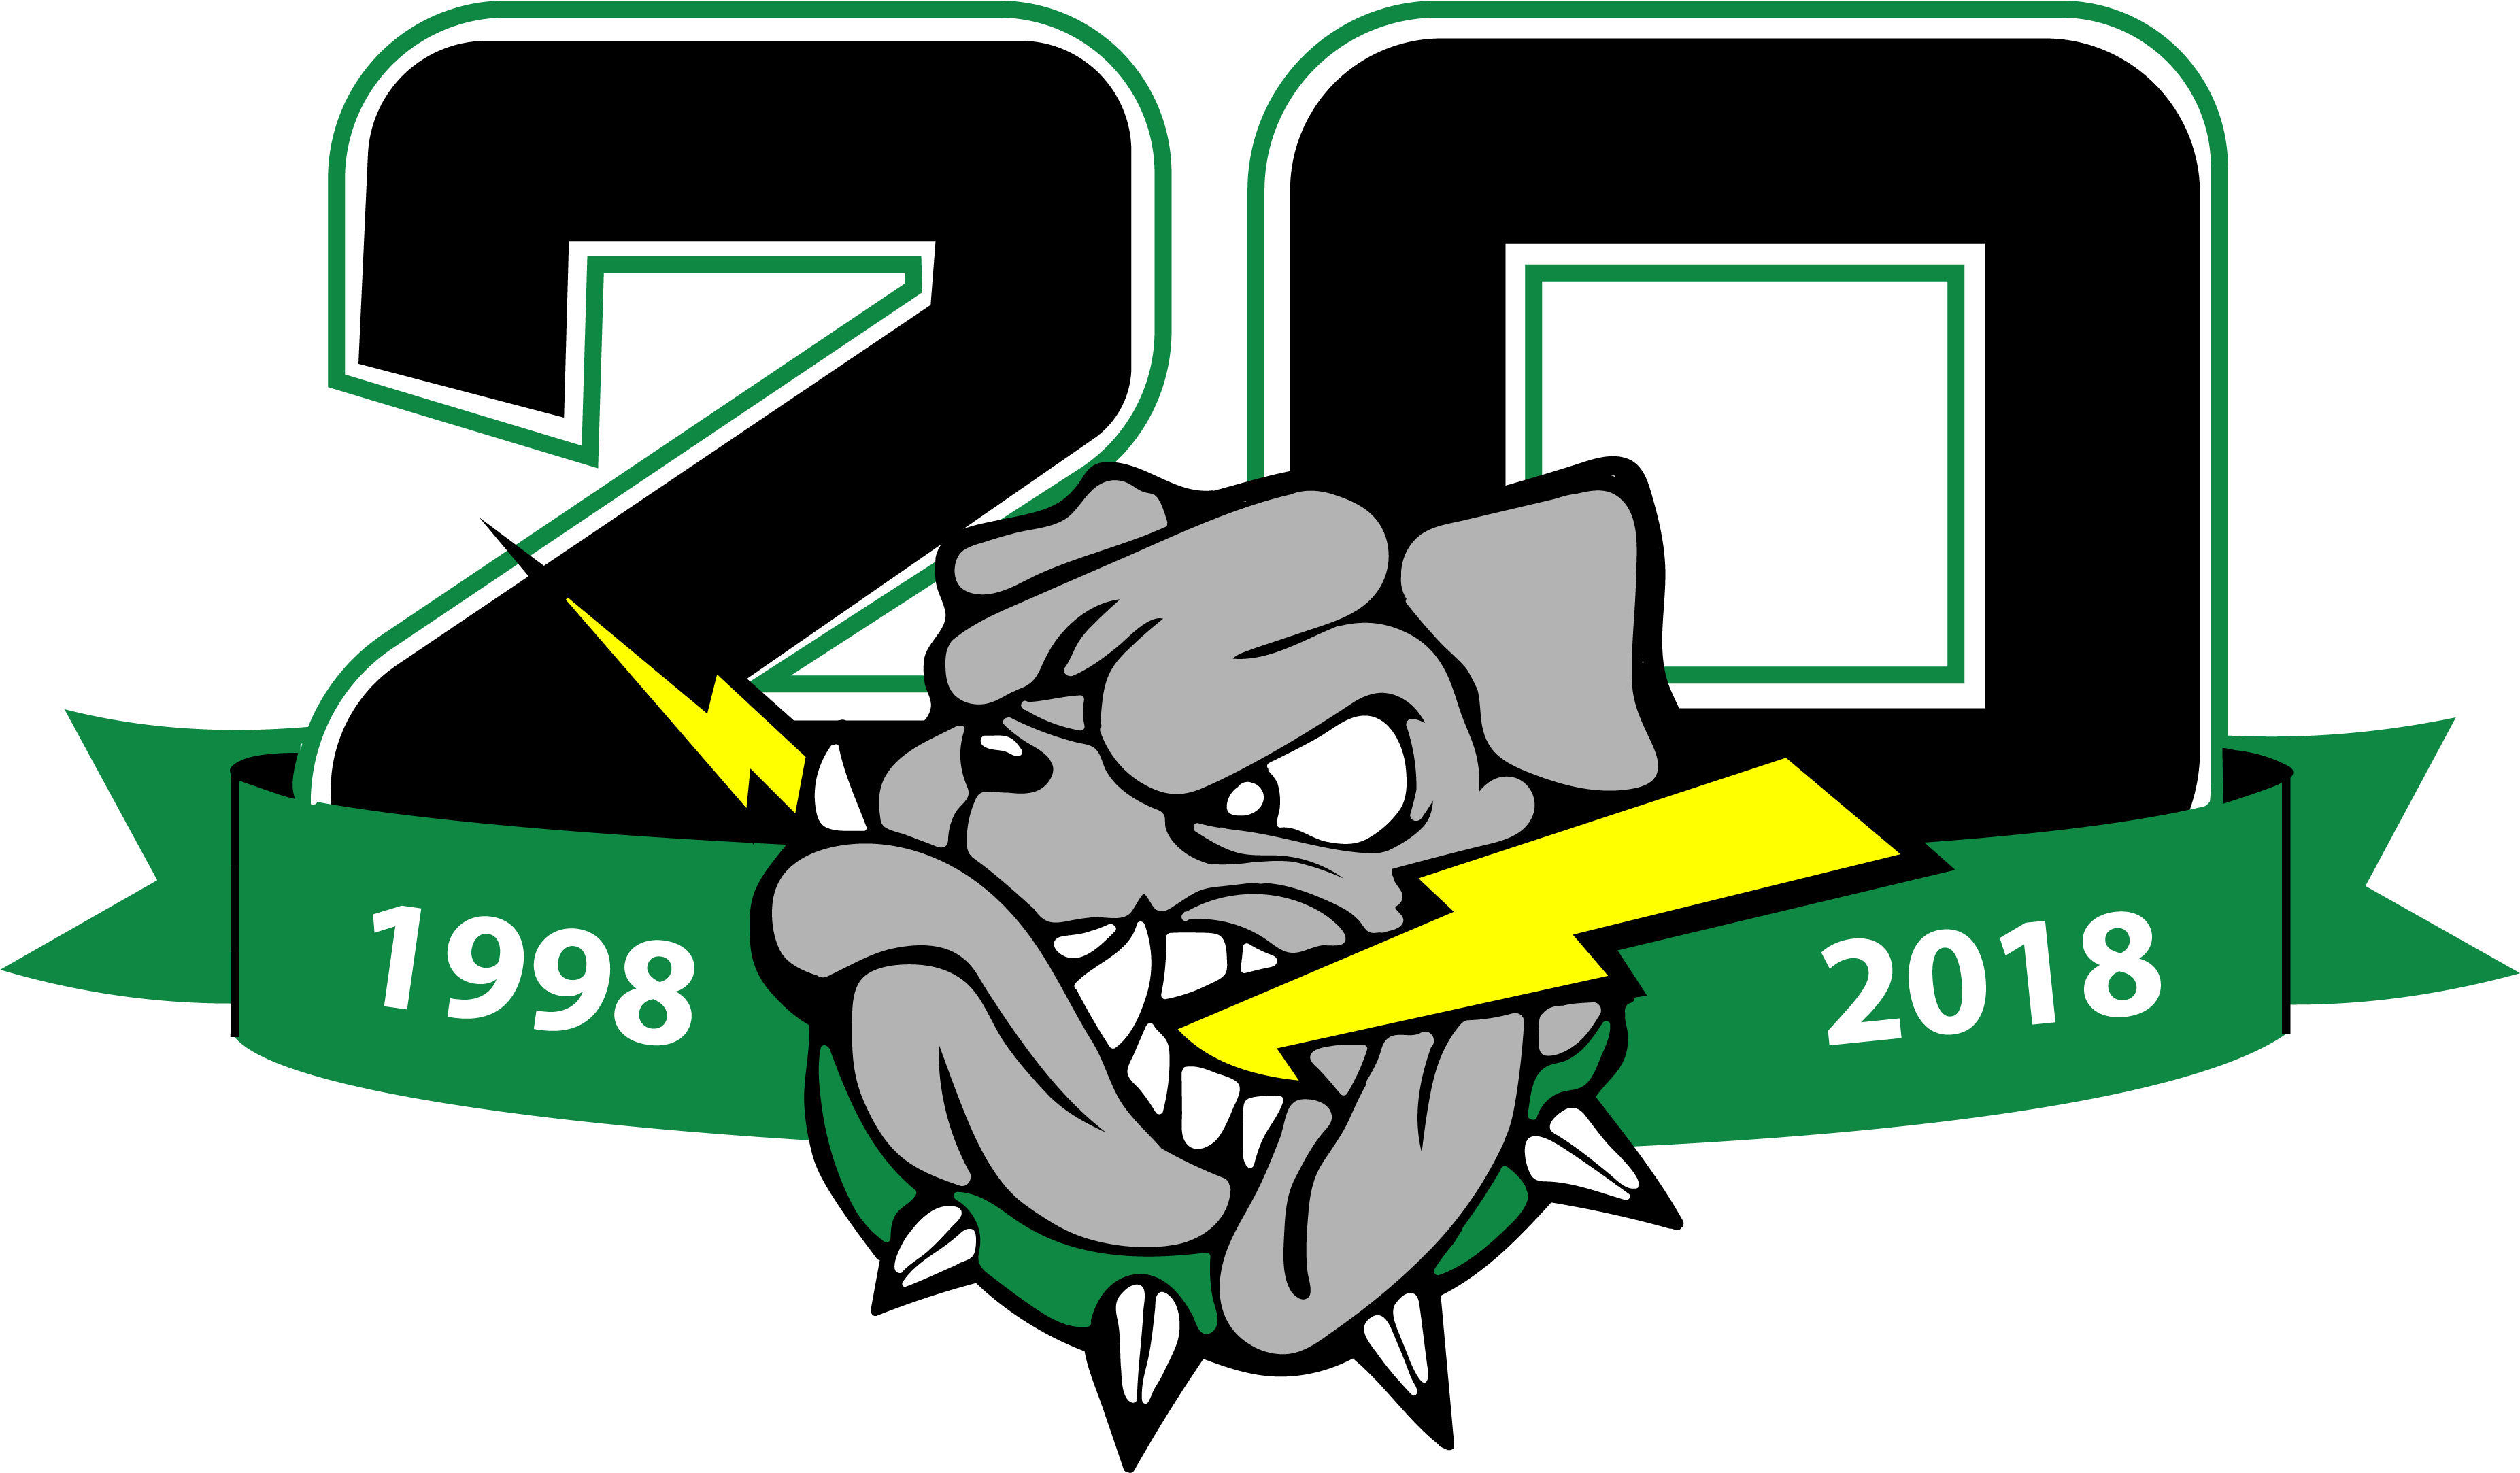 The Drayton Valley Thunder Hockey Club Today Unveiled - 1998 2018 20th Anniversary (3705x2166)